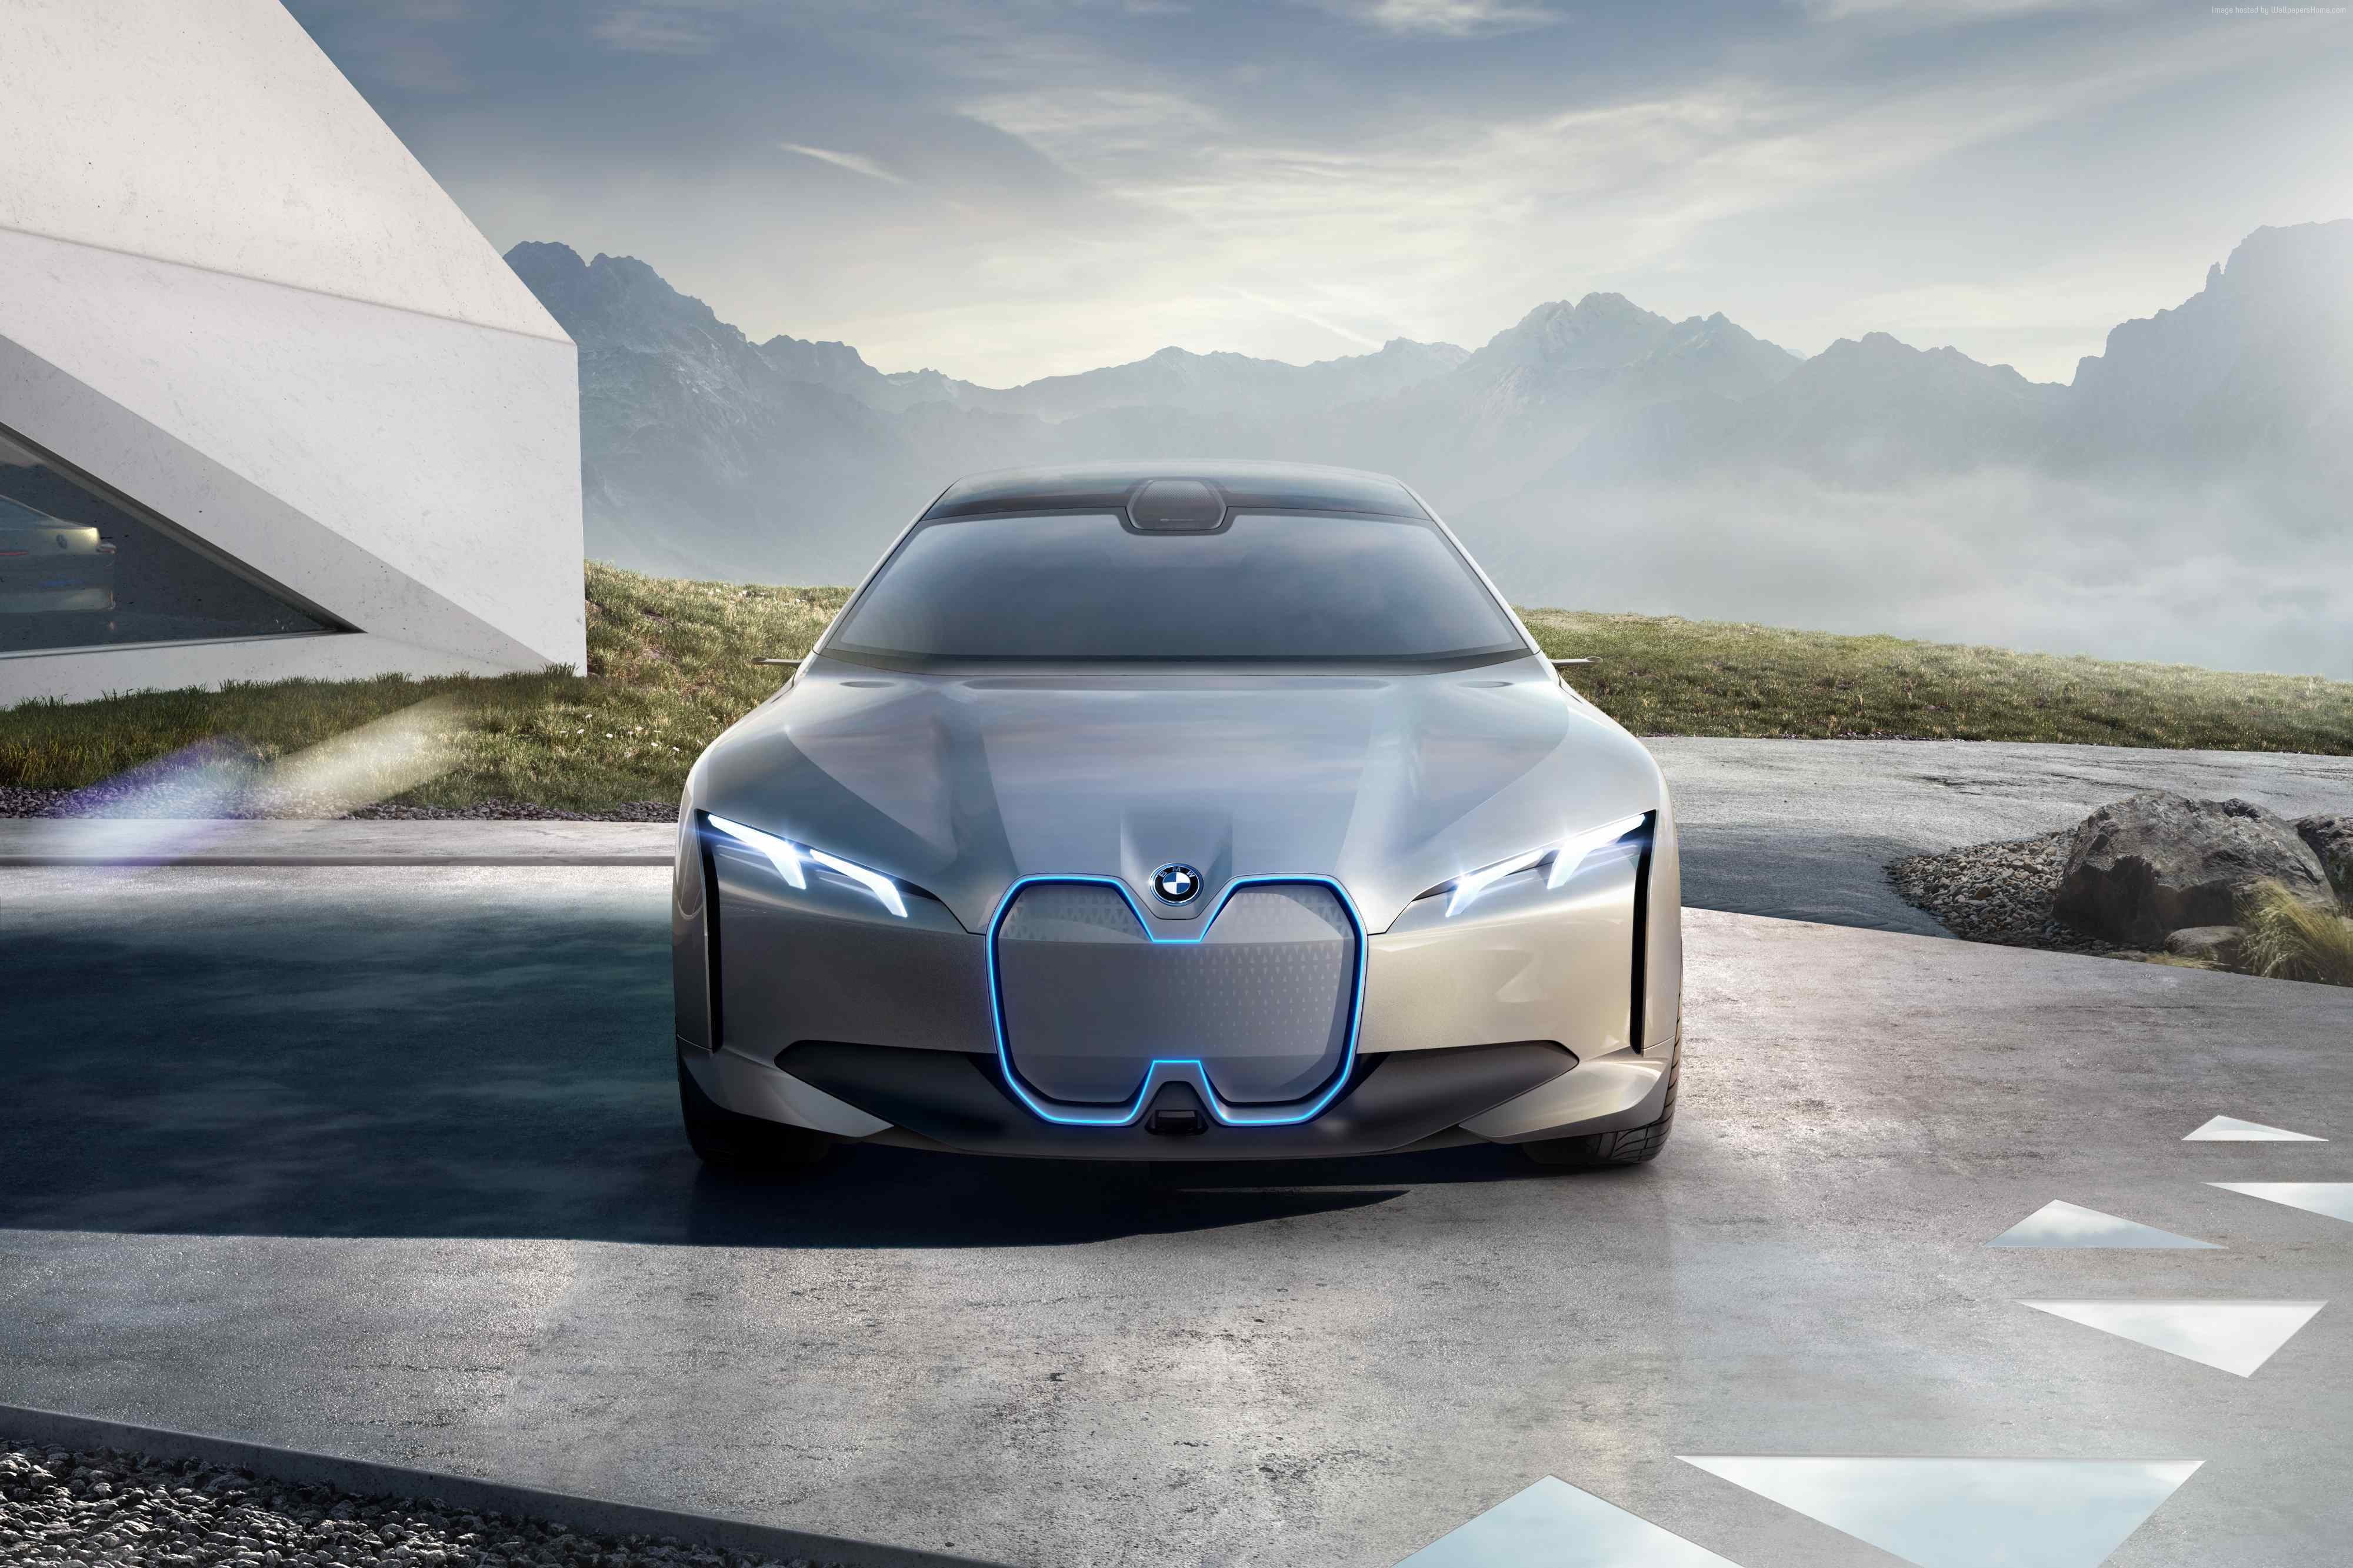 4k, electric car, BMW i Vision Dynamics, motor vehicle, mode of transportation